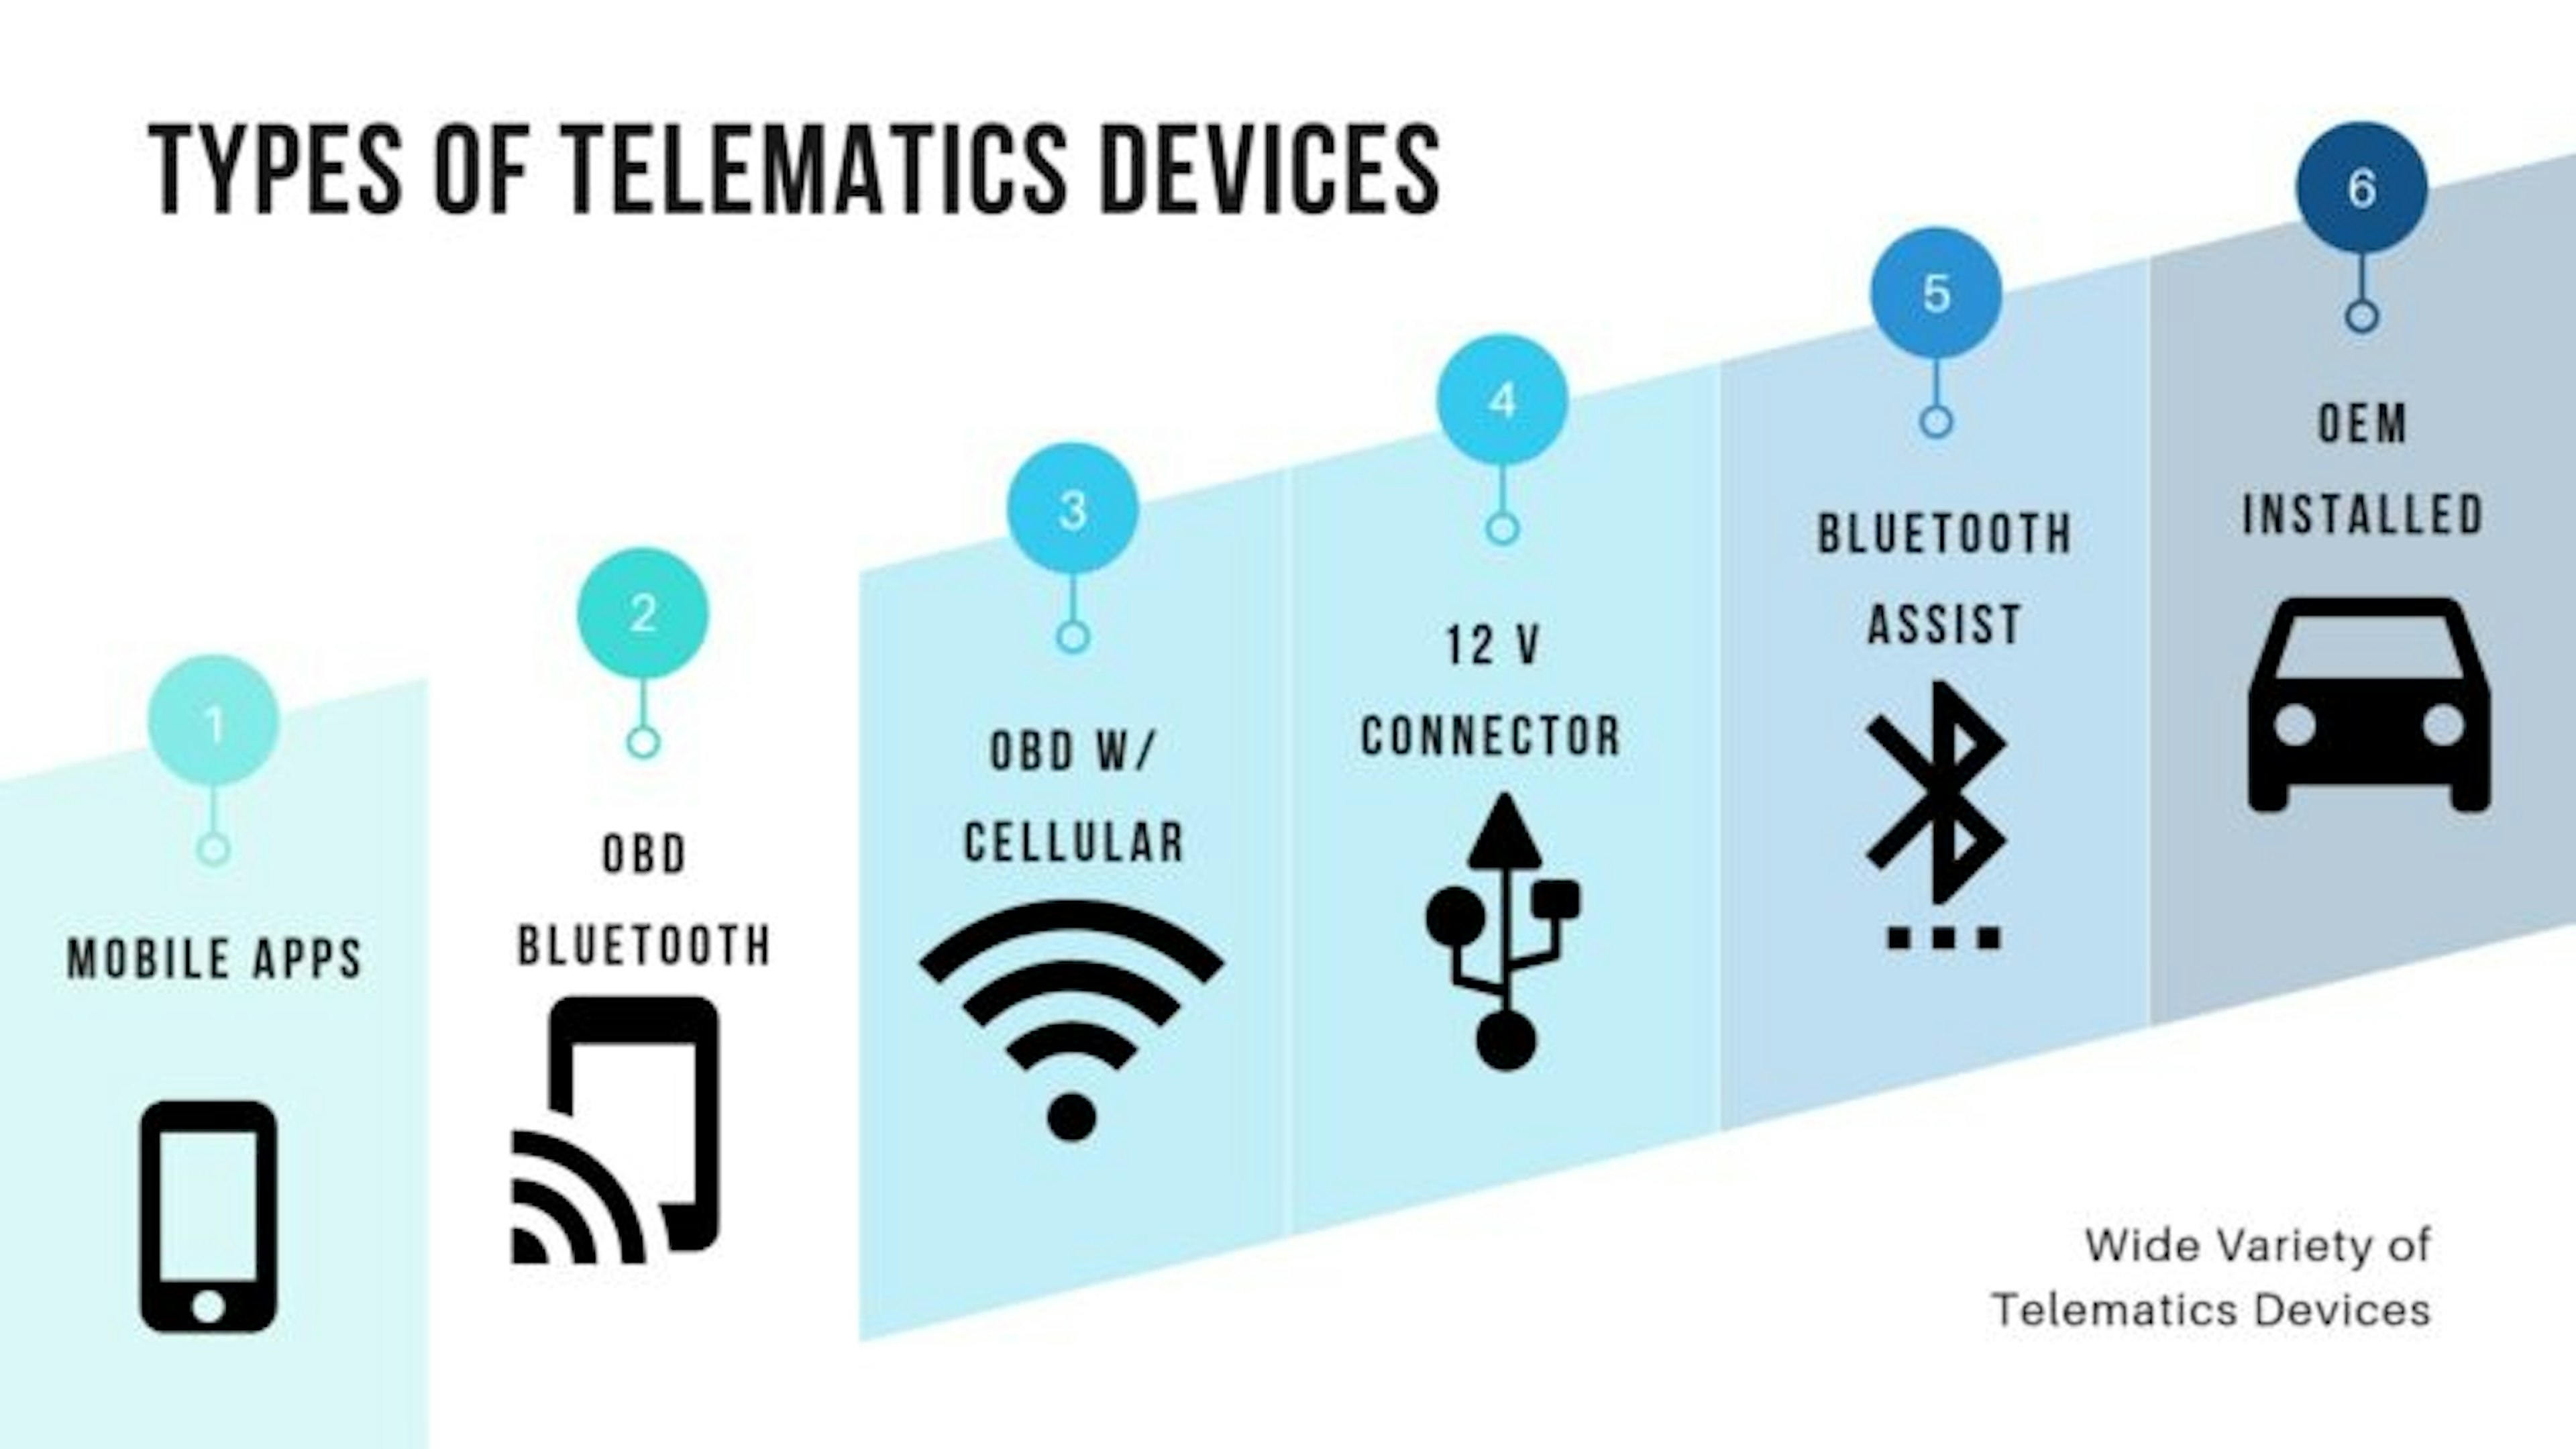 Telematics devices